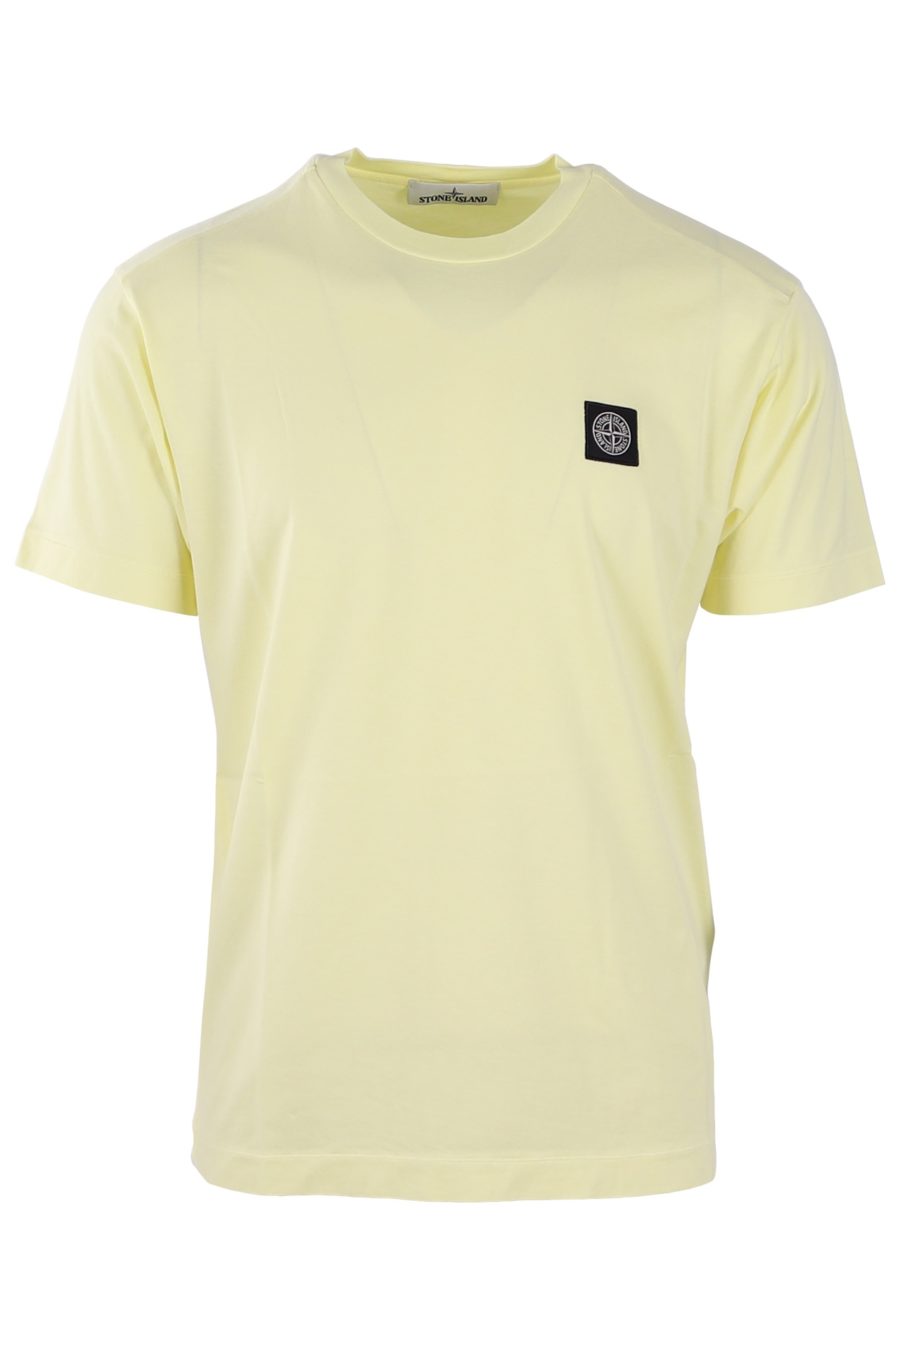 Stone Island T-shirt jaune avec patch - 2f1569937aab6bb8a54e8bef7cfa2a845617f7a4